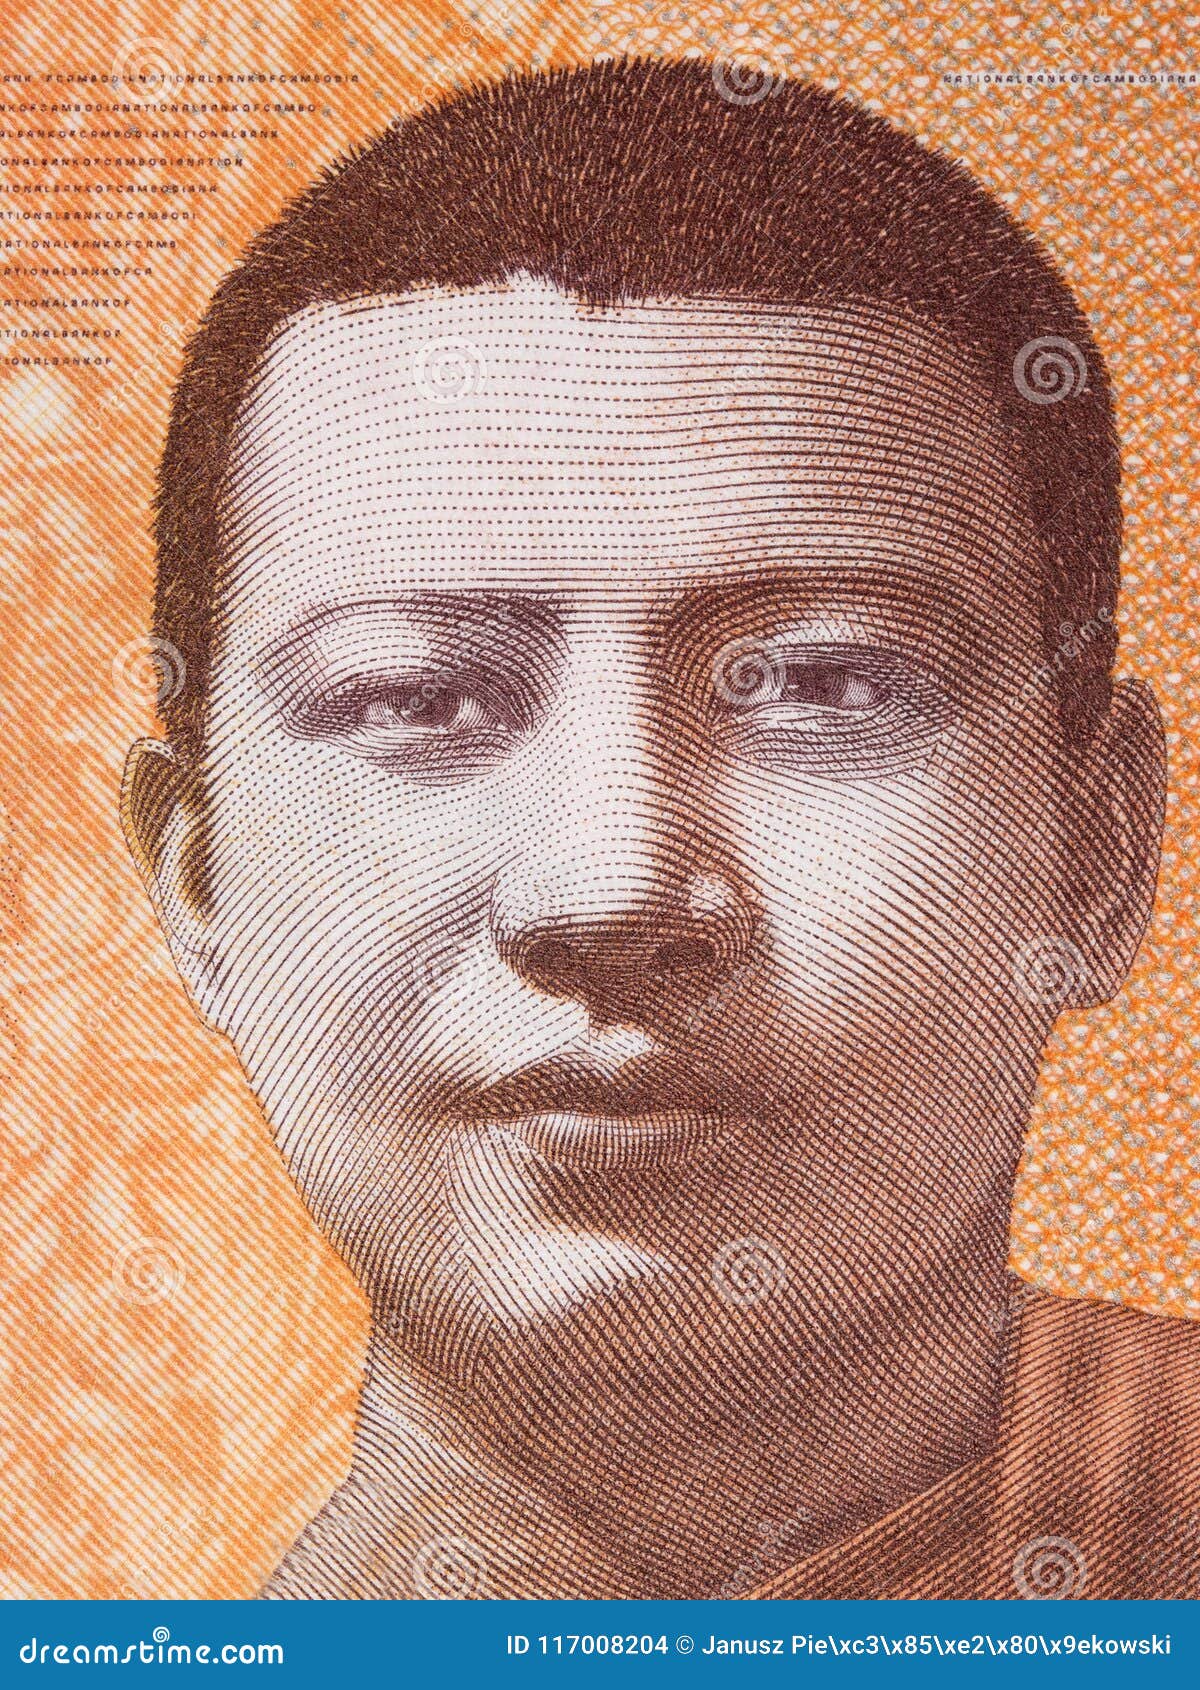 young norodom sihanouk, a portrait